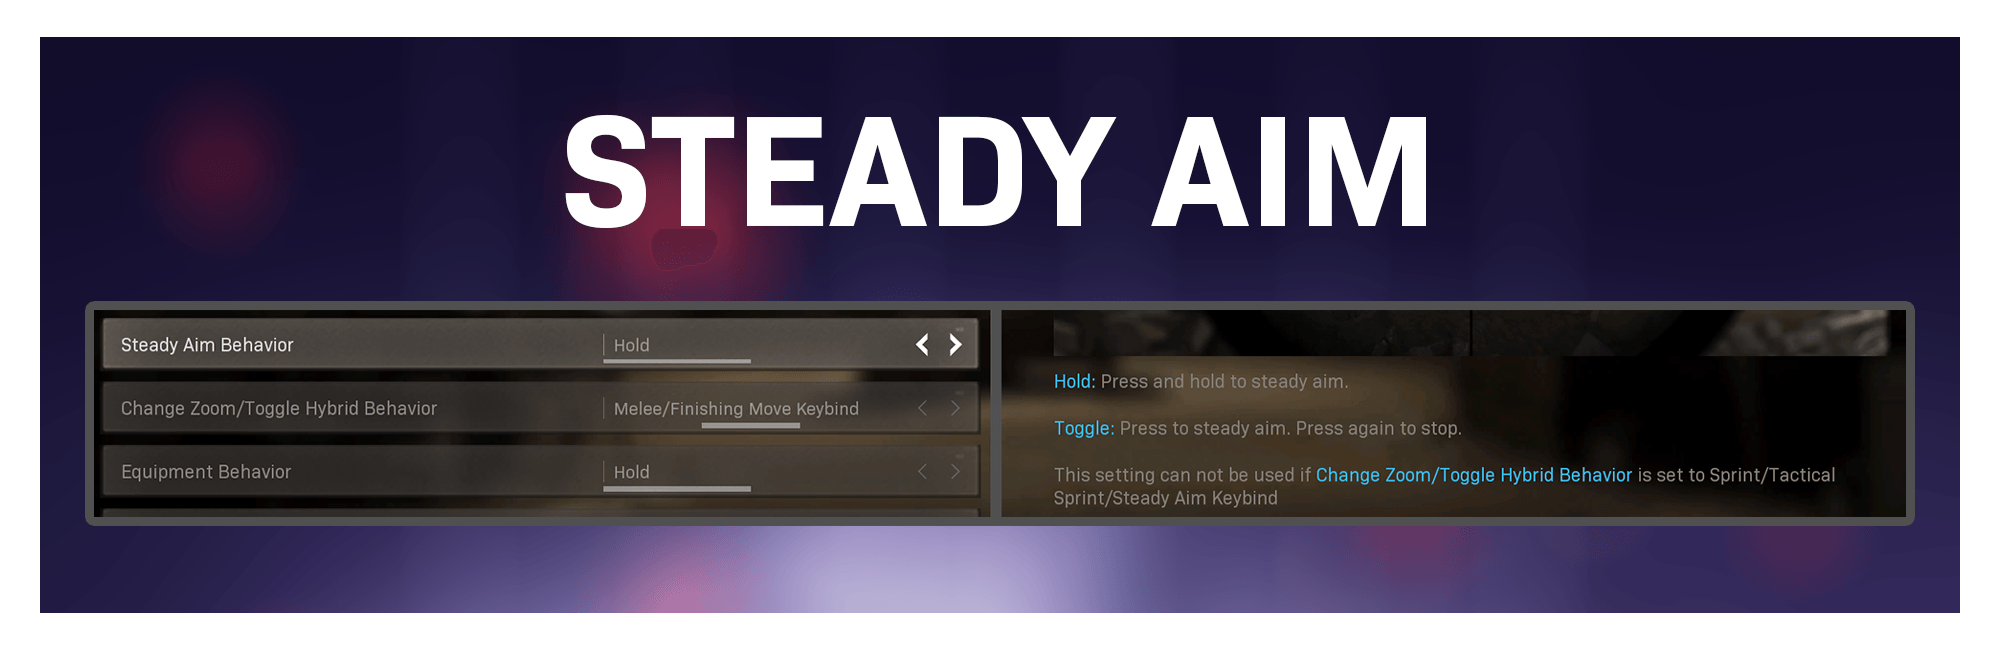 Banner showing the new Steady Aim Behavior menu option.